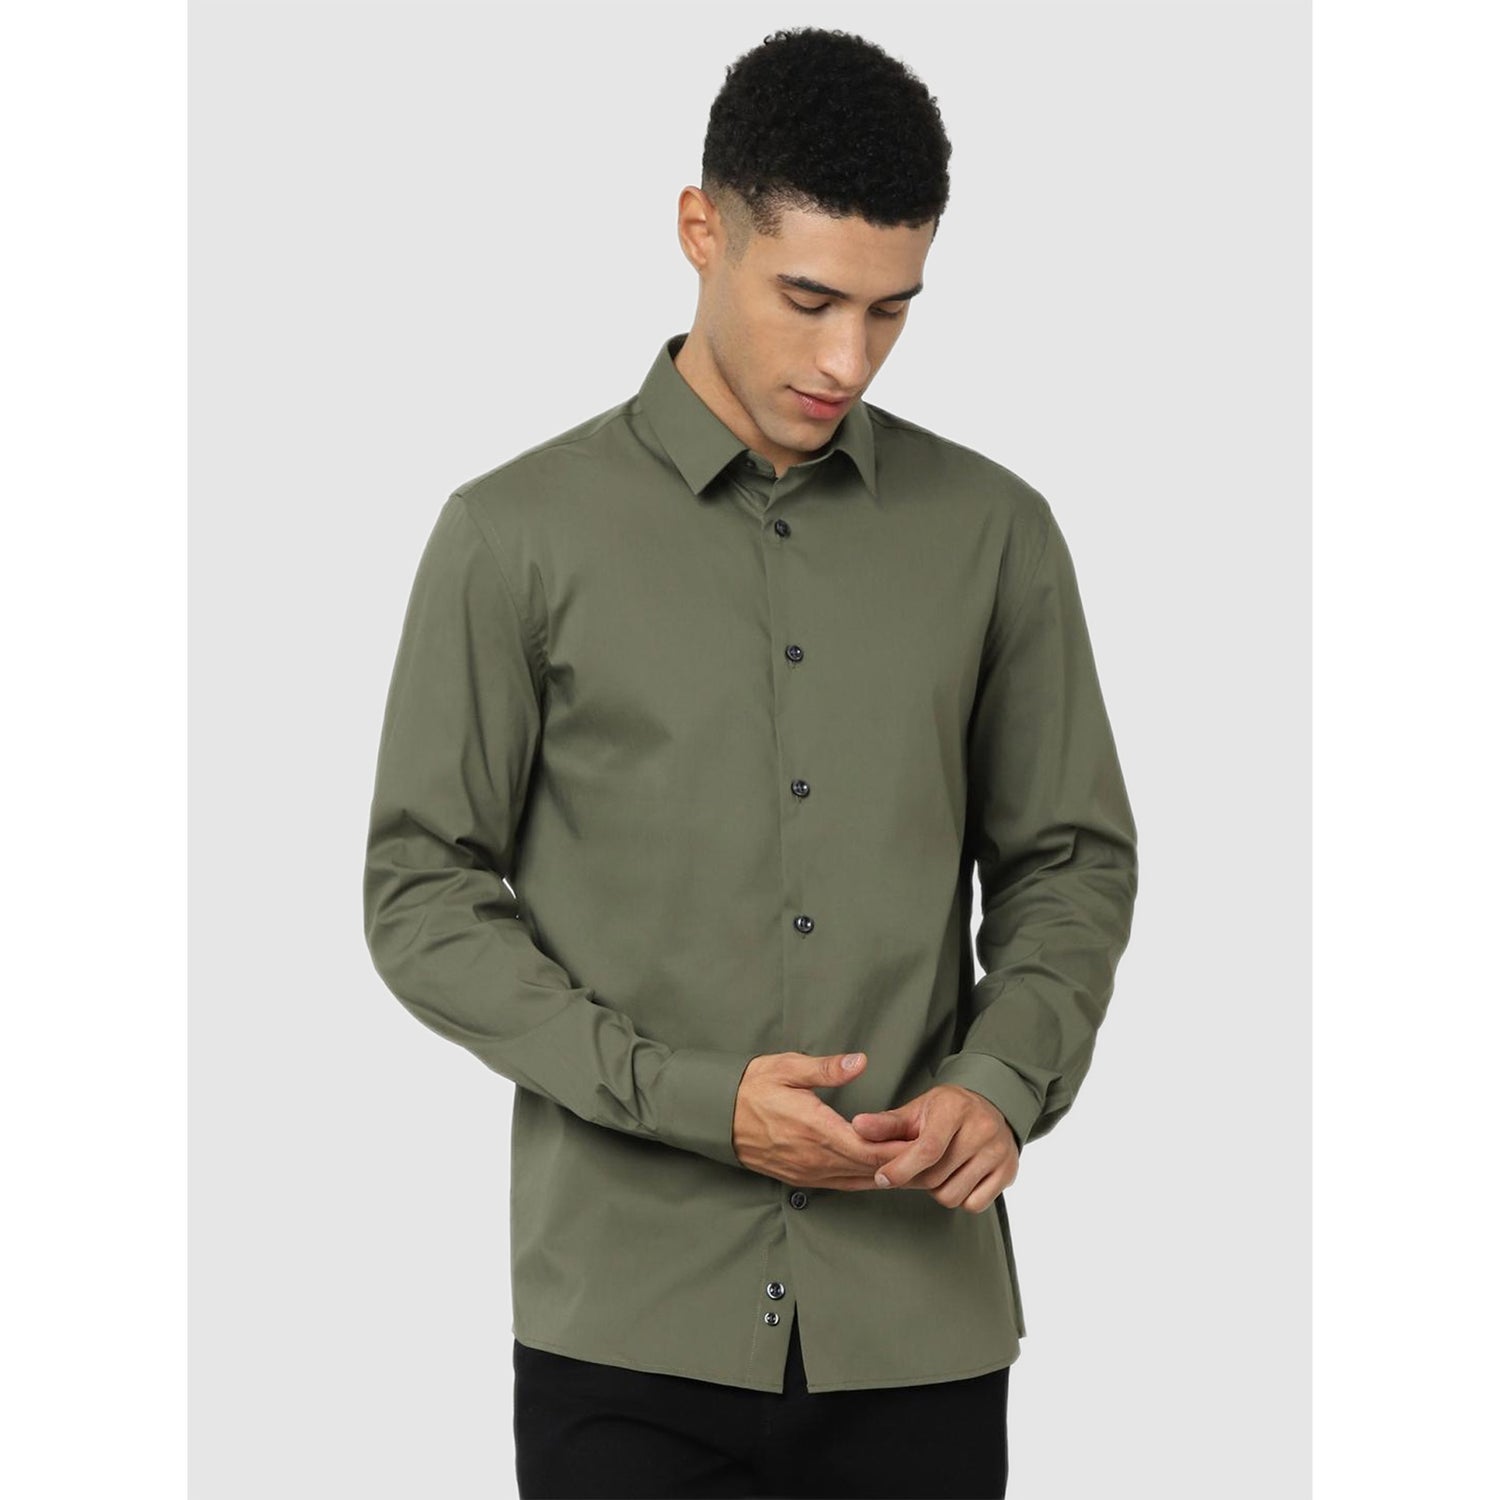 Olive Green Classic Casual Long Sleeve Collar Regular Fit Shirt (MASANTAL)